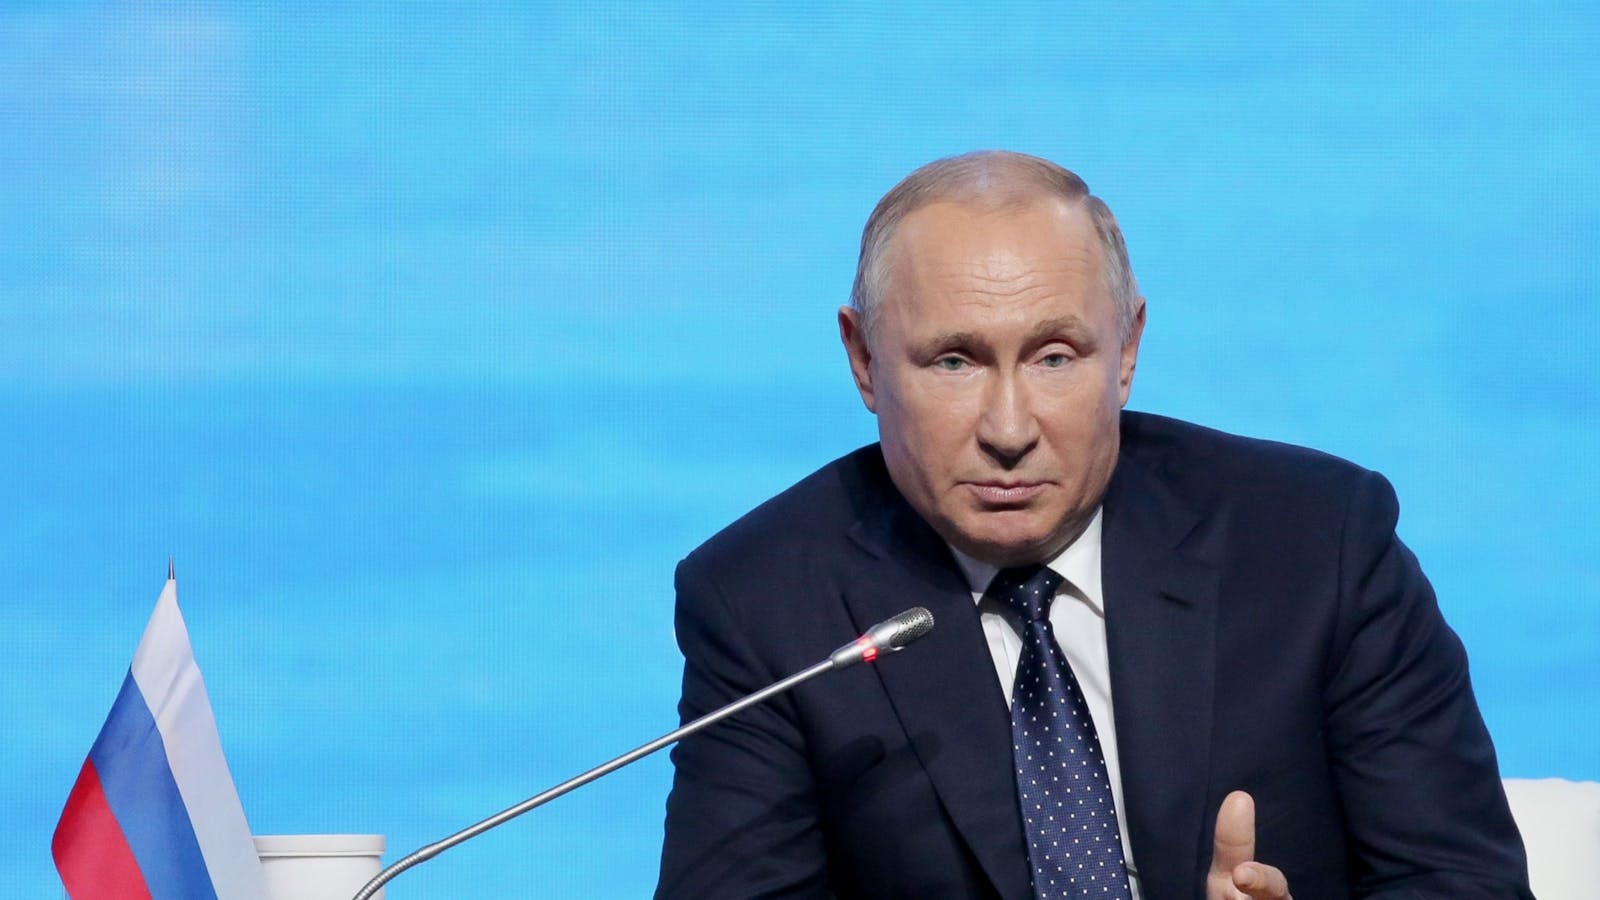 Russian President Vladimir Putin. Photo by Bloomberg